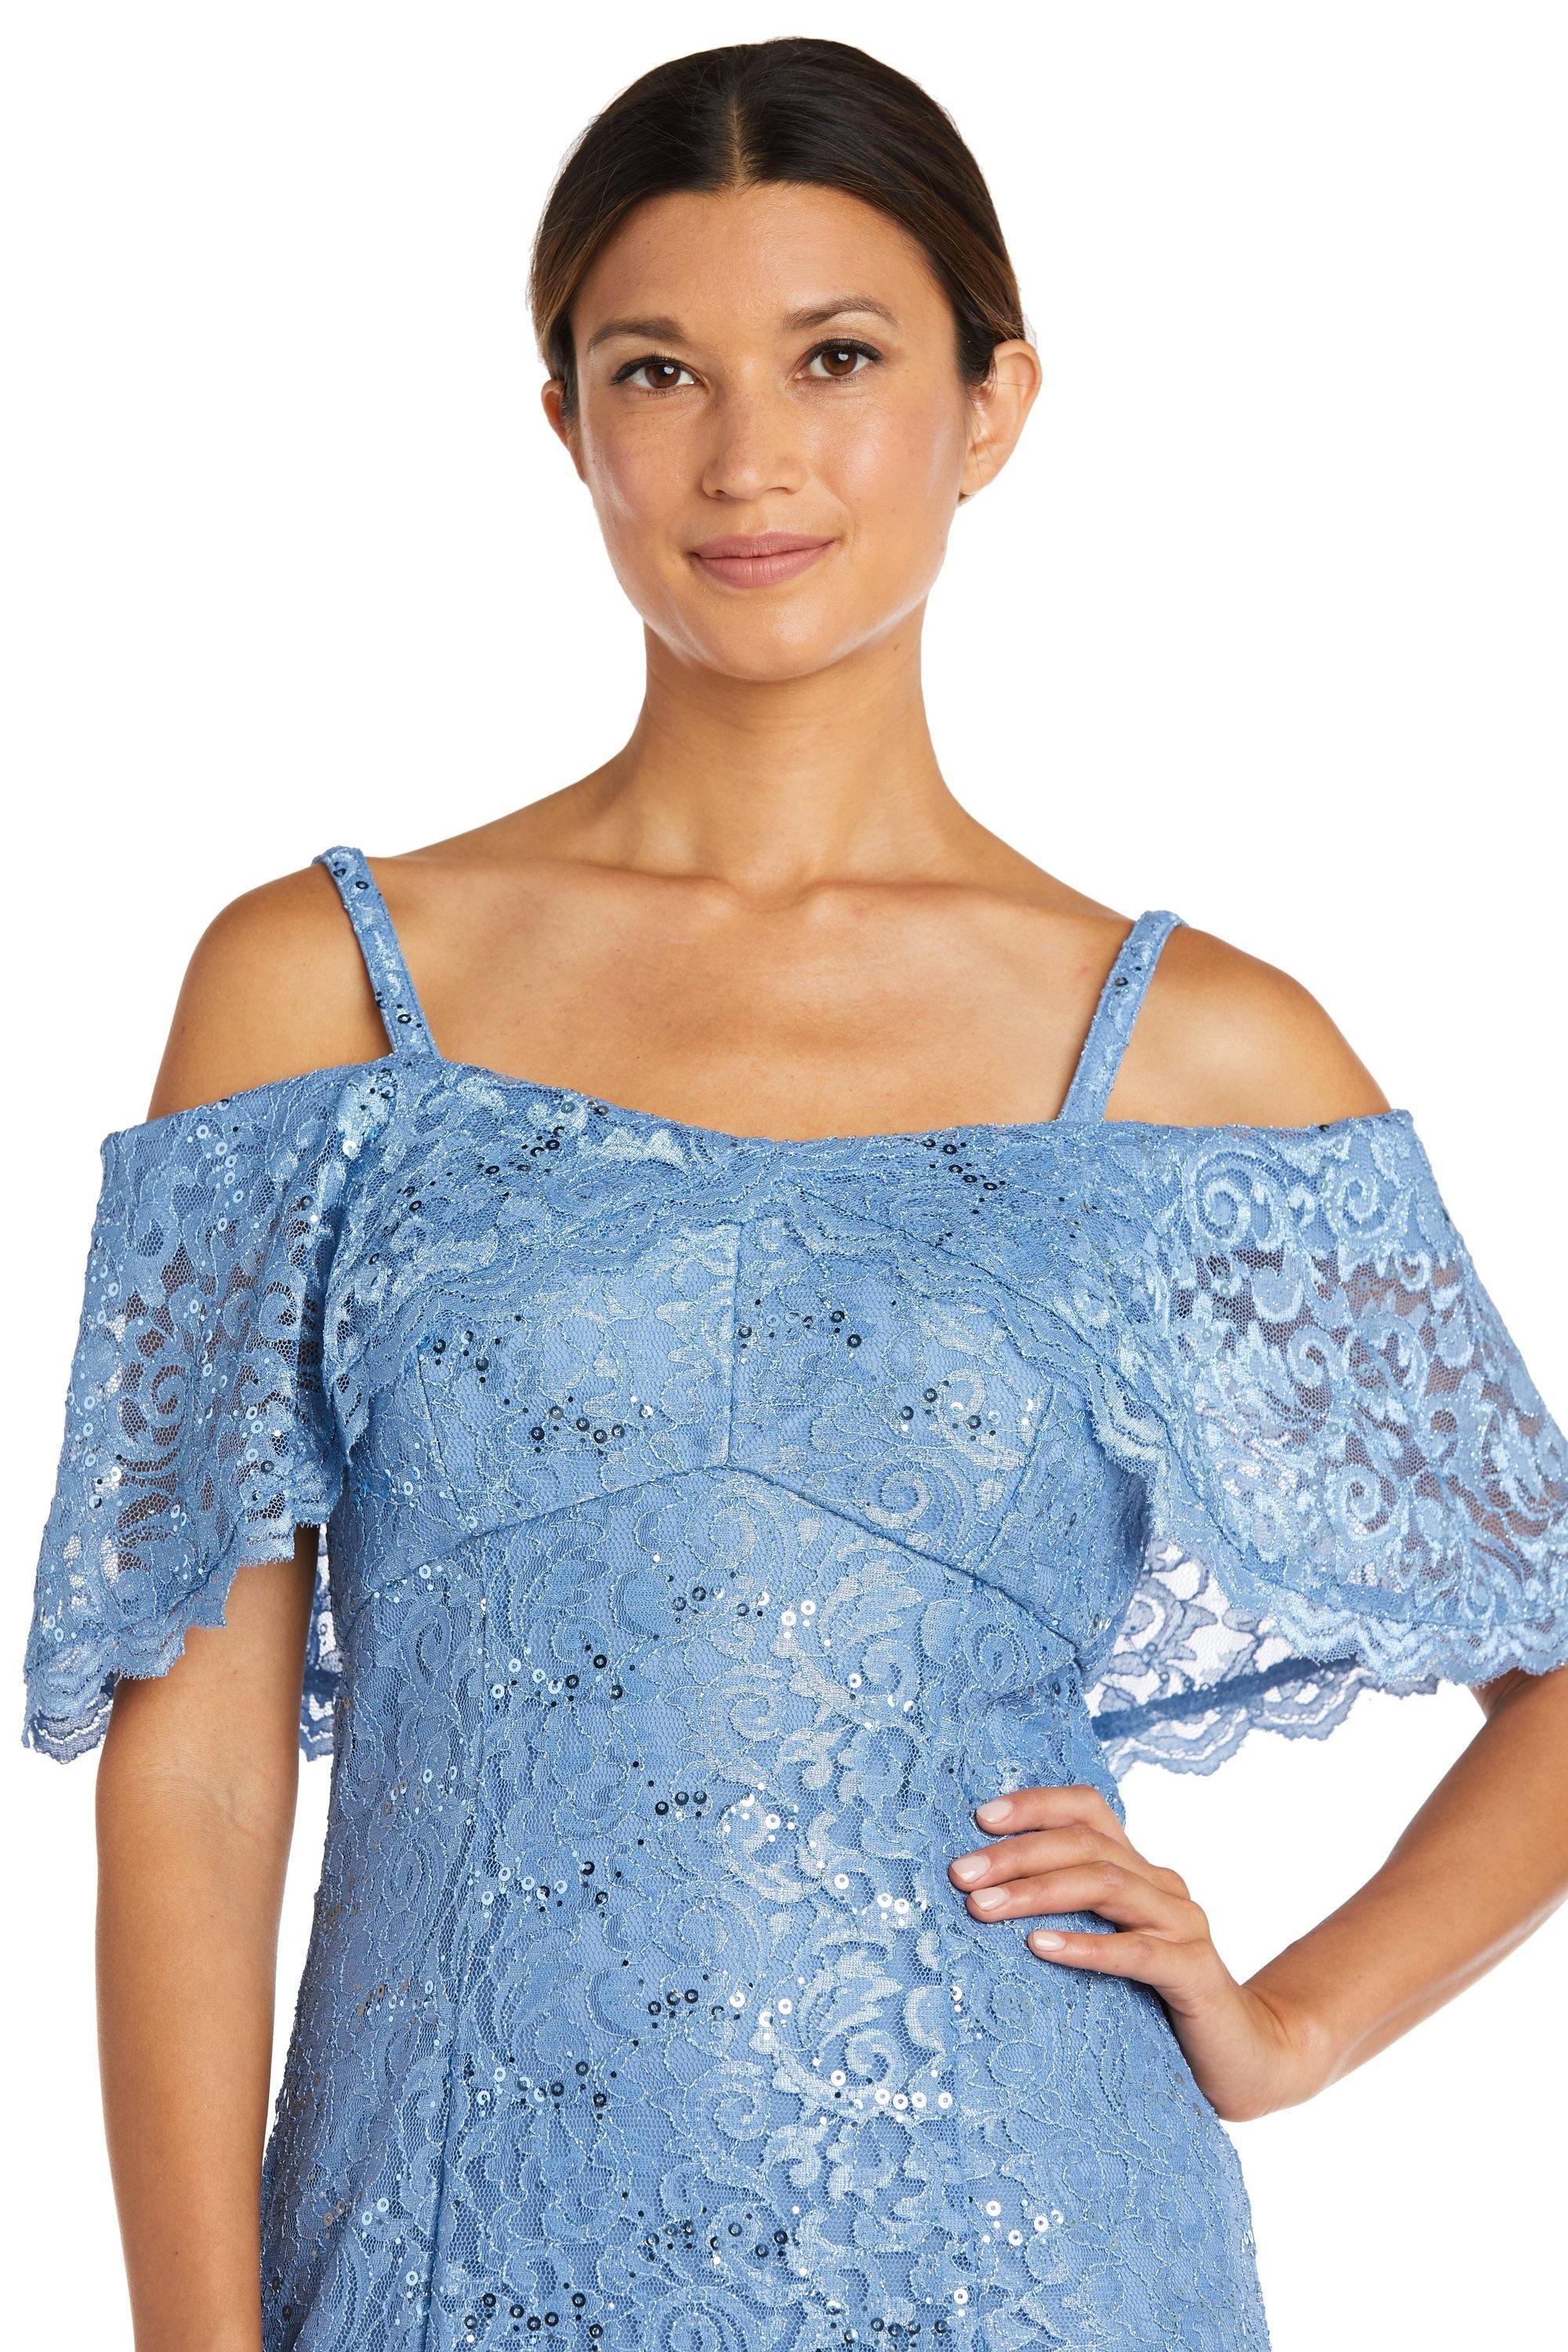 R&M Richards Long Formal Off Shoulder Lace Gown 2331 - The Dress Outlet